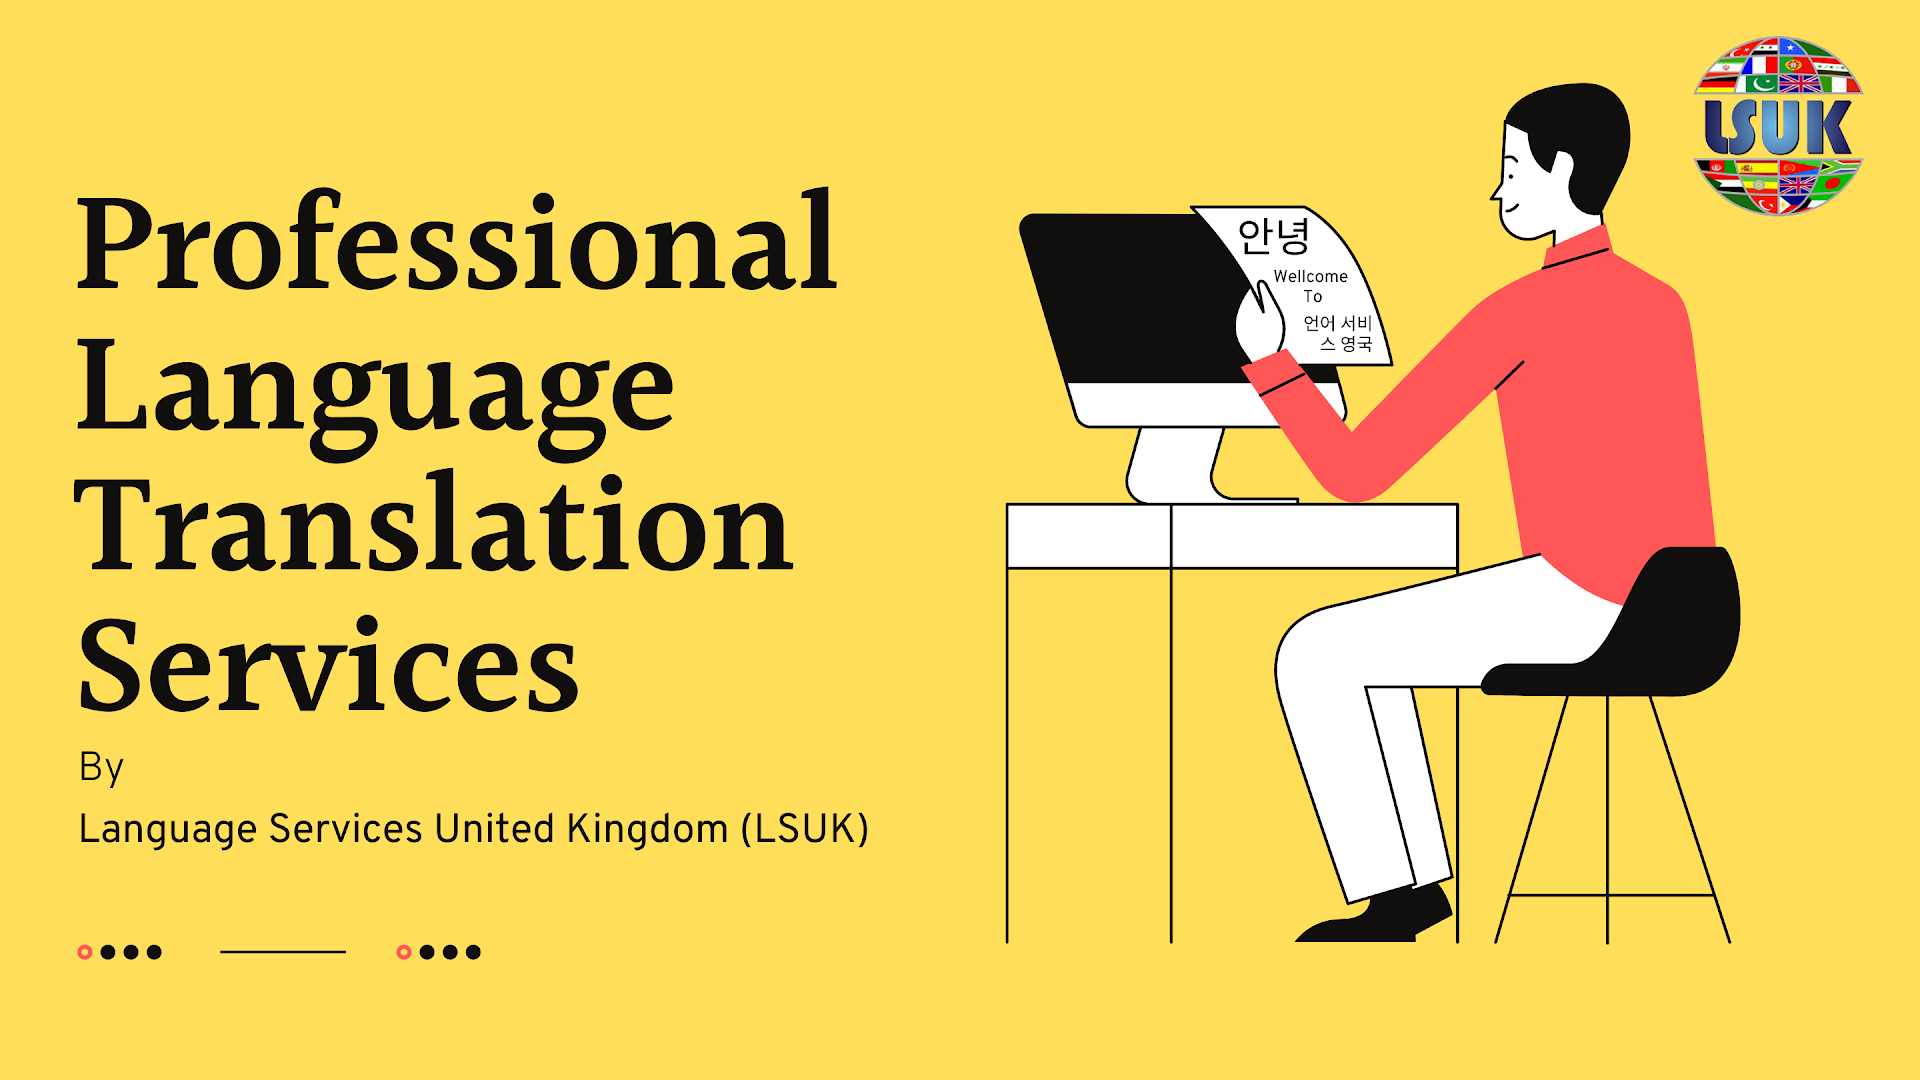 Language Services UK Limited